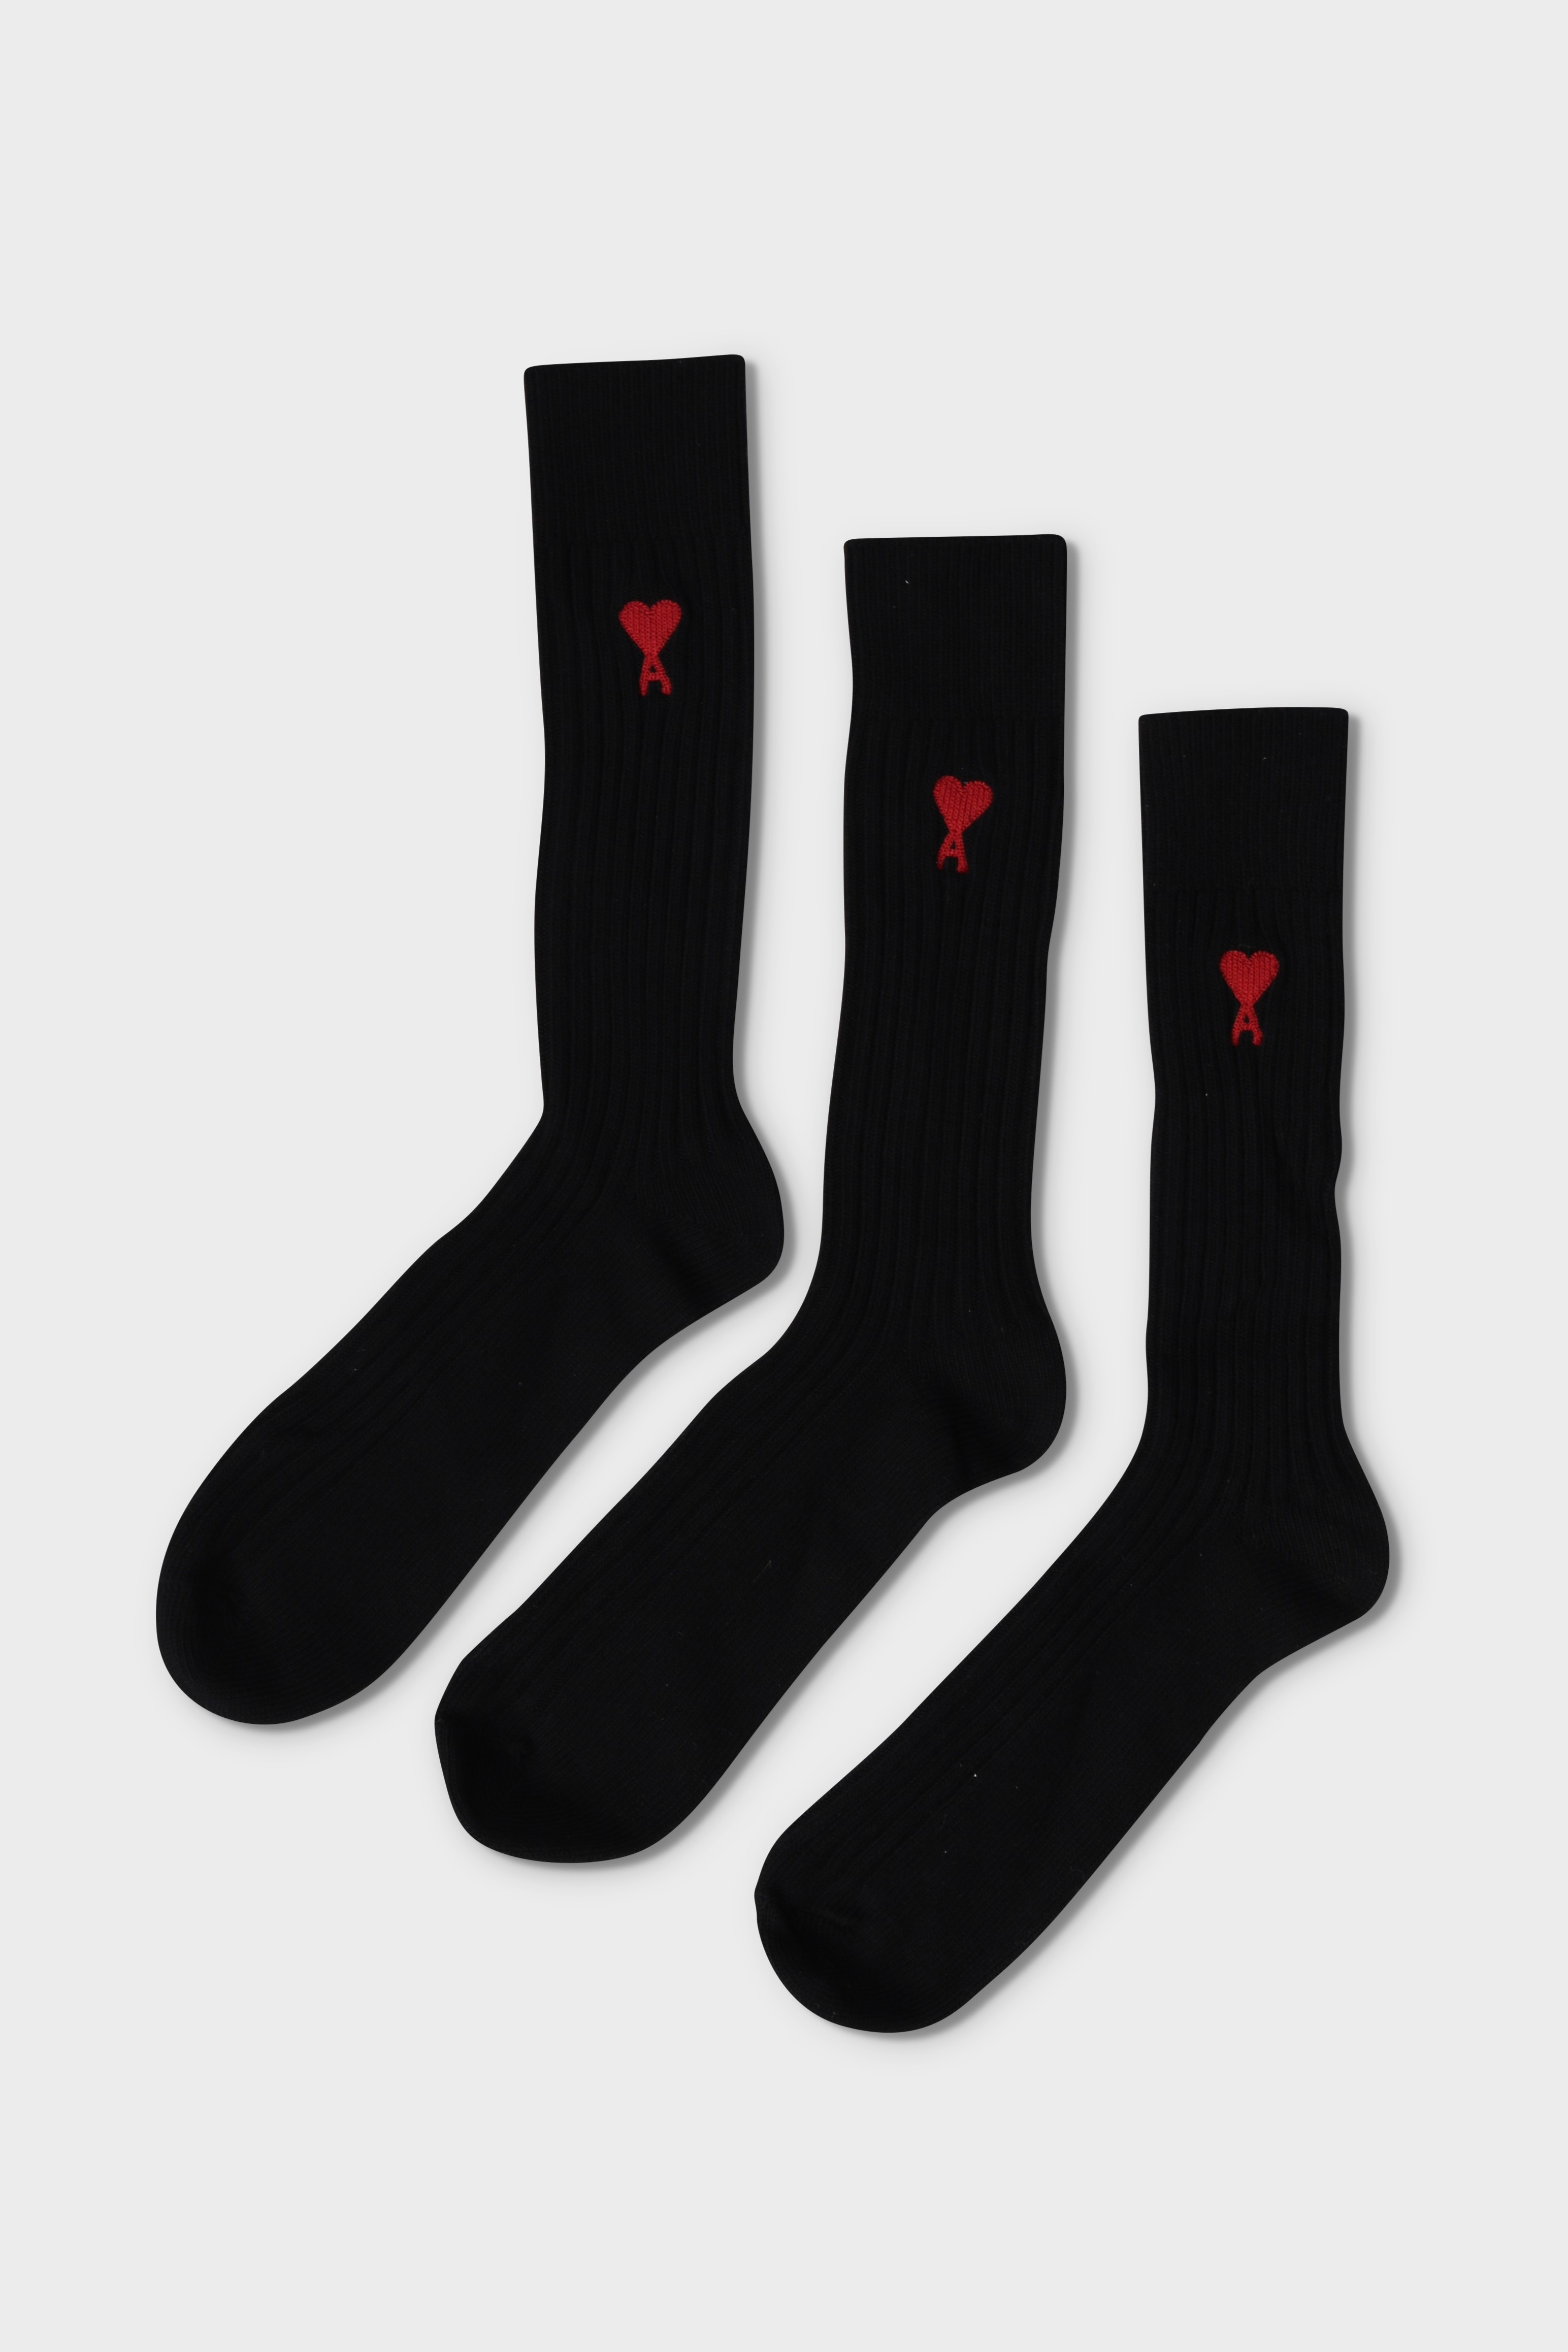 AMI PARIS de Coeur 3 Pack Socks in Black 43-46